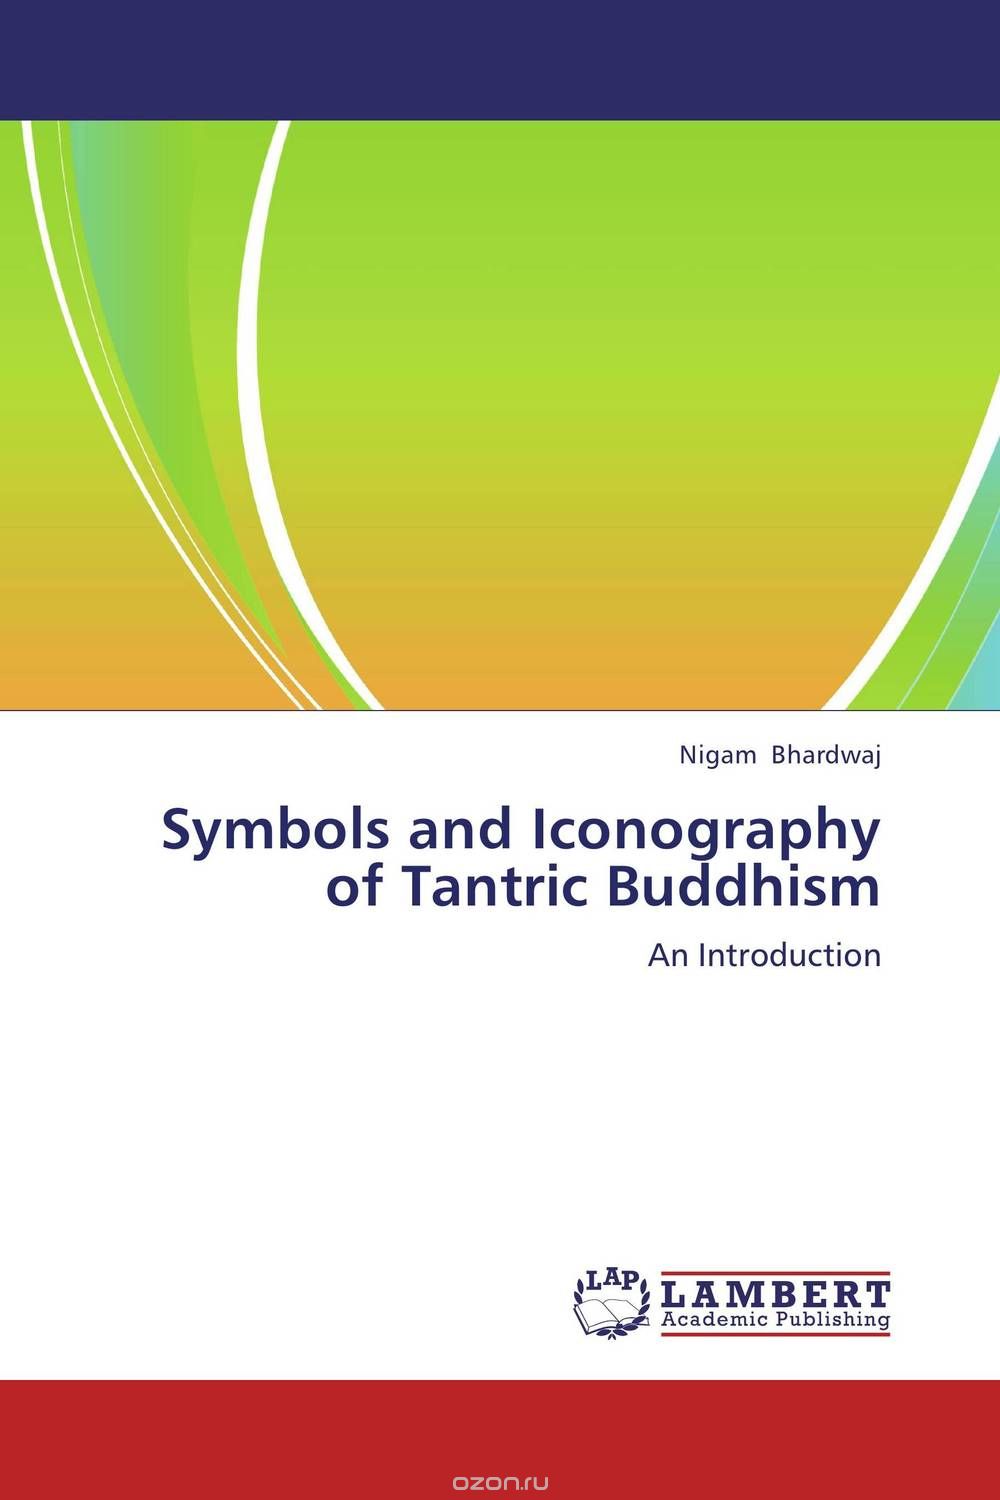 Скачать книгу "Symbols and Iconography of Tantric Buddhism"